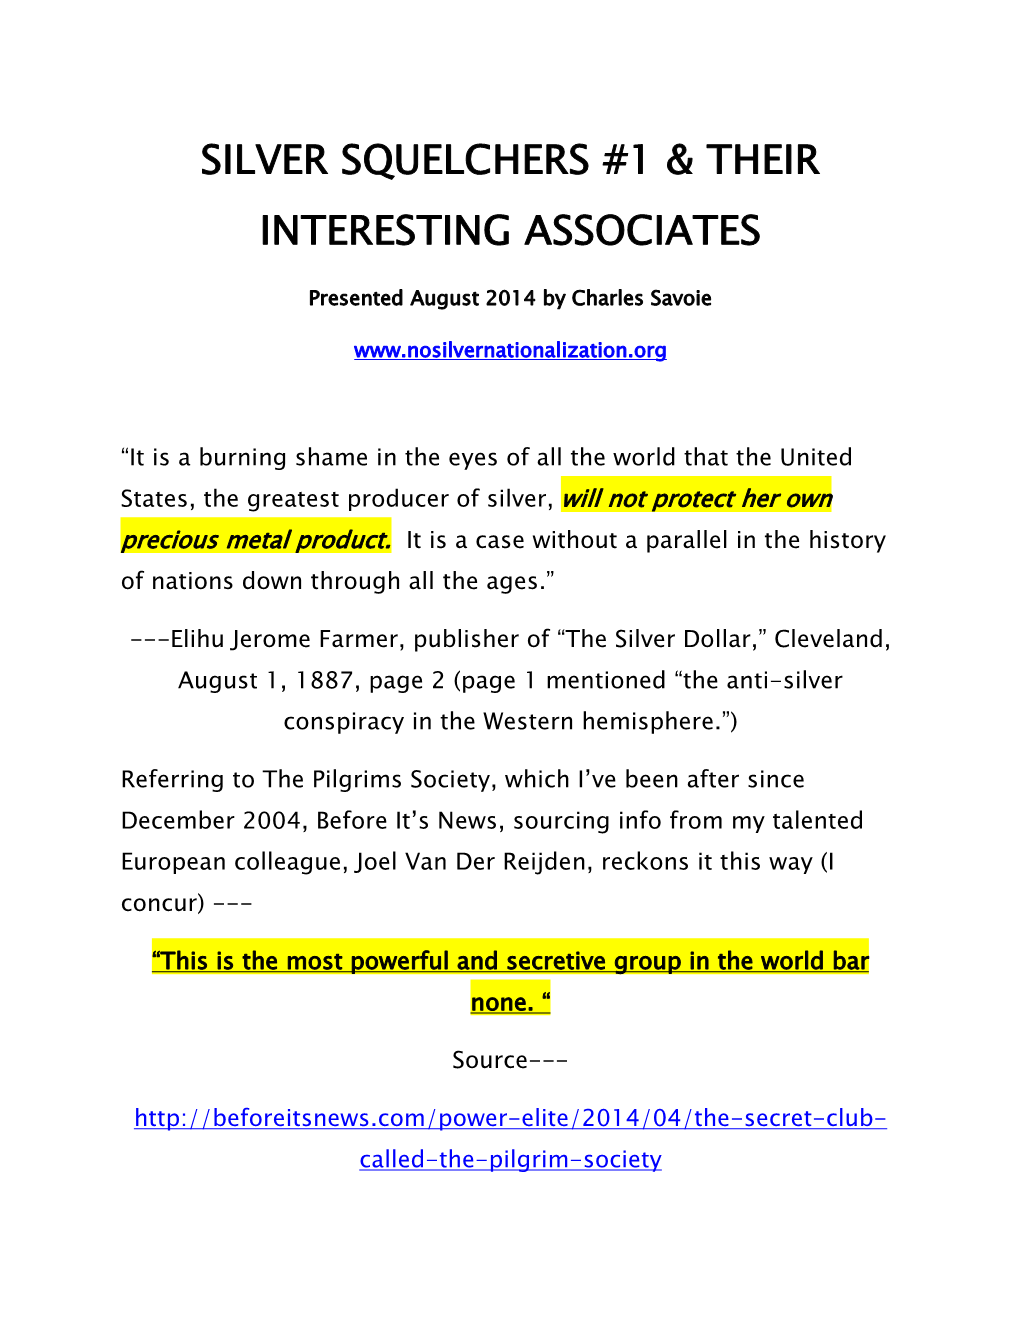 Silver Squelchers #1 & Their Interesting Associates